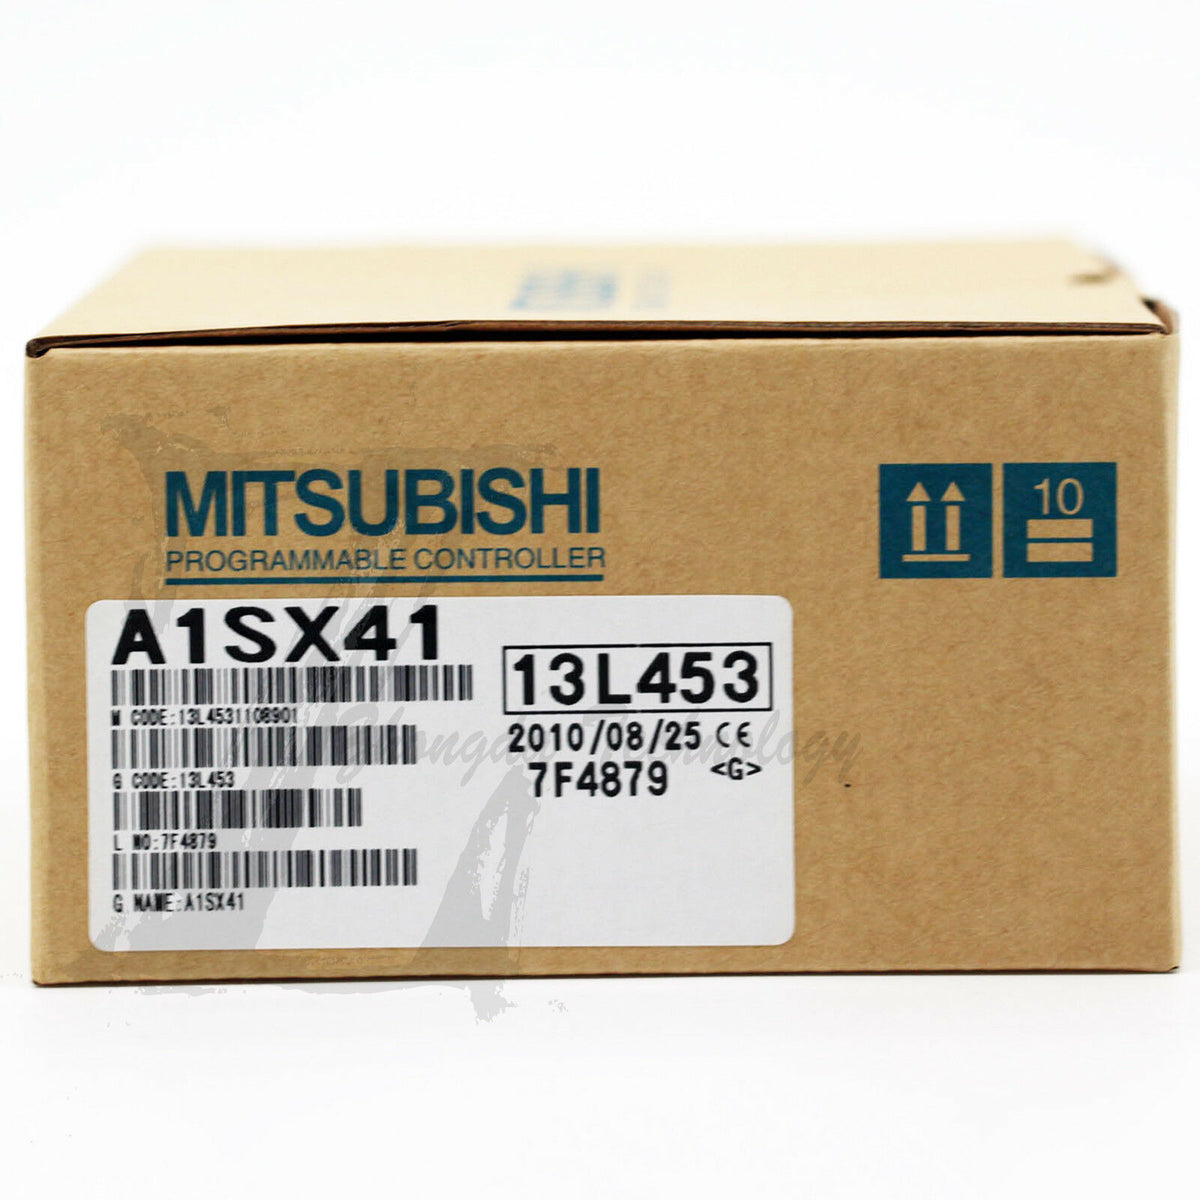 MITSUBISHIA1SX41PLC40.00 USD